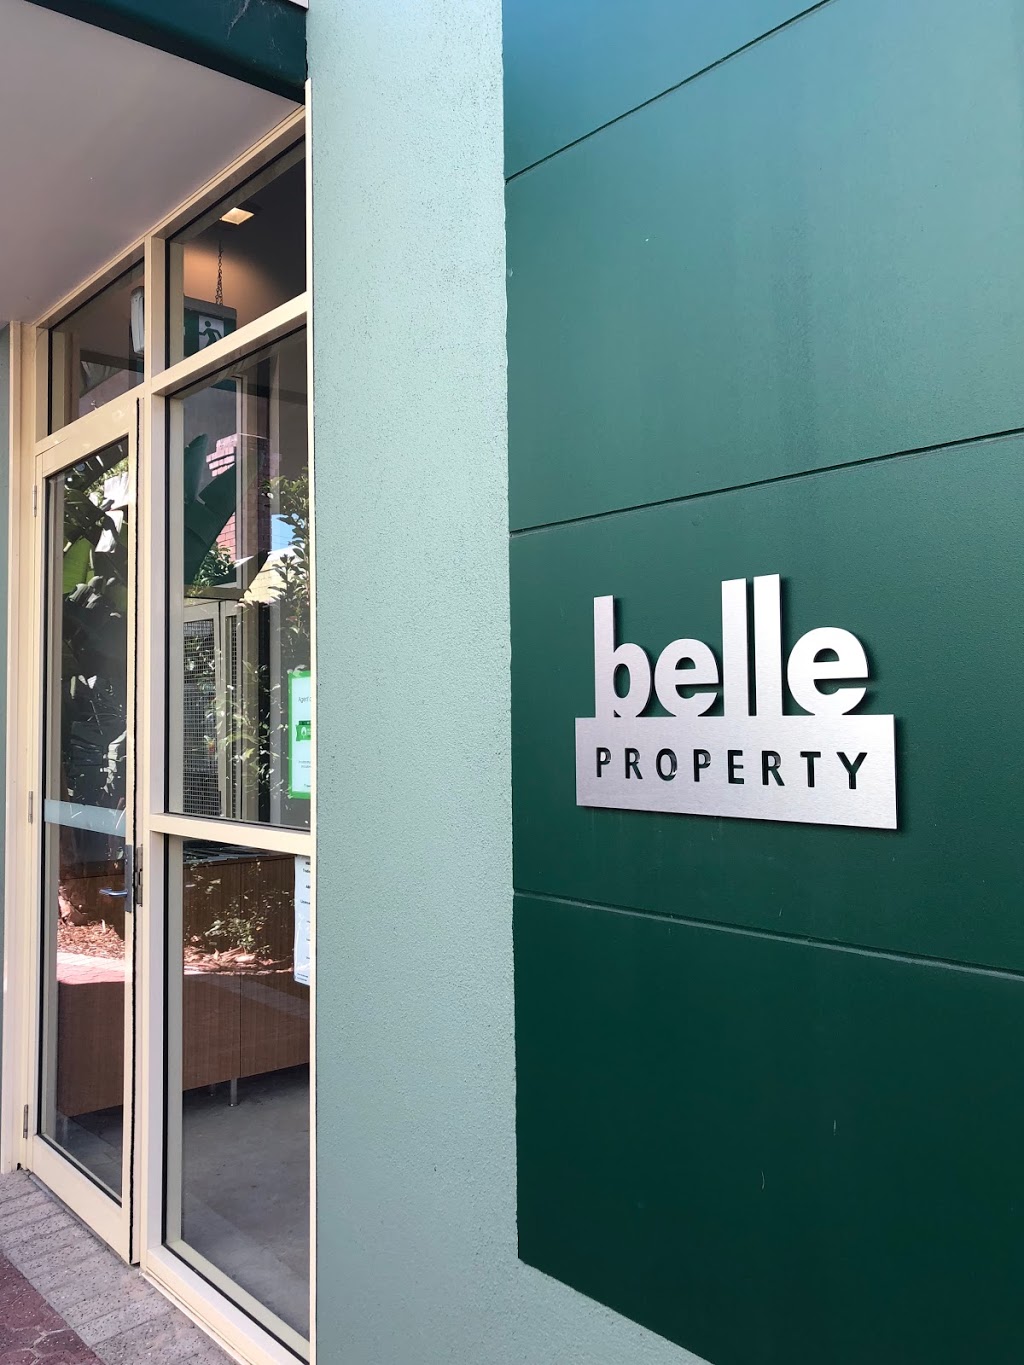 Belle Property Strathfield | Shop 43/38 Albert Rd, Strathfield NSW 2135, Australia | Phone: (02) 8322 6900